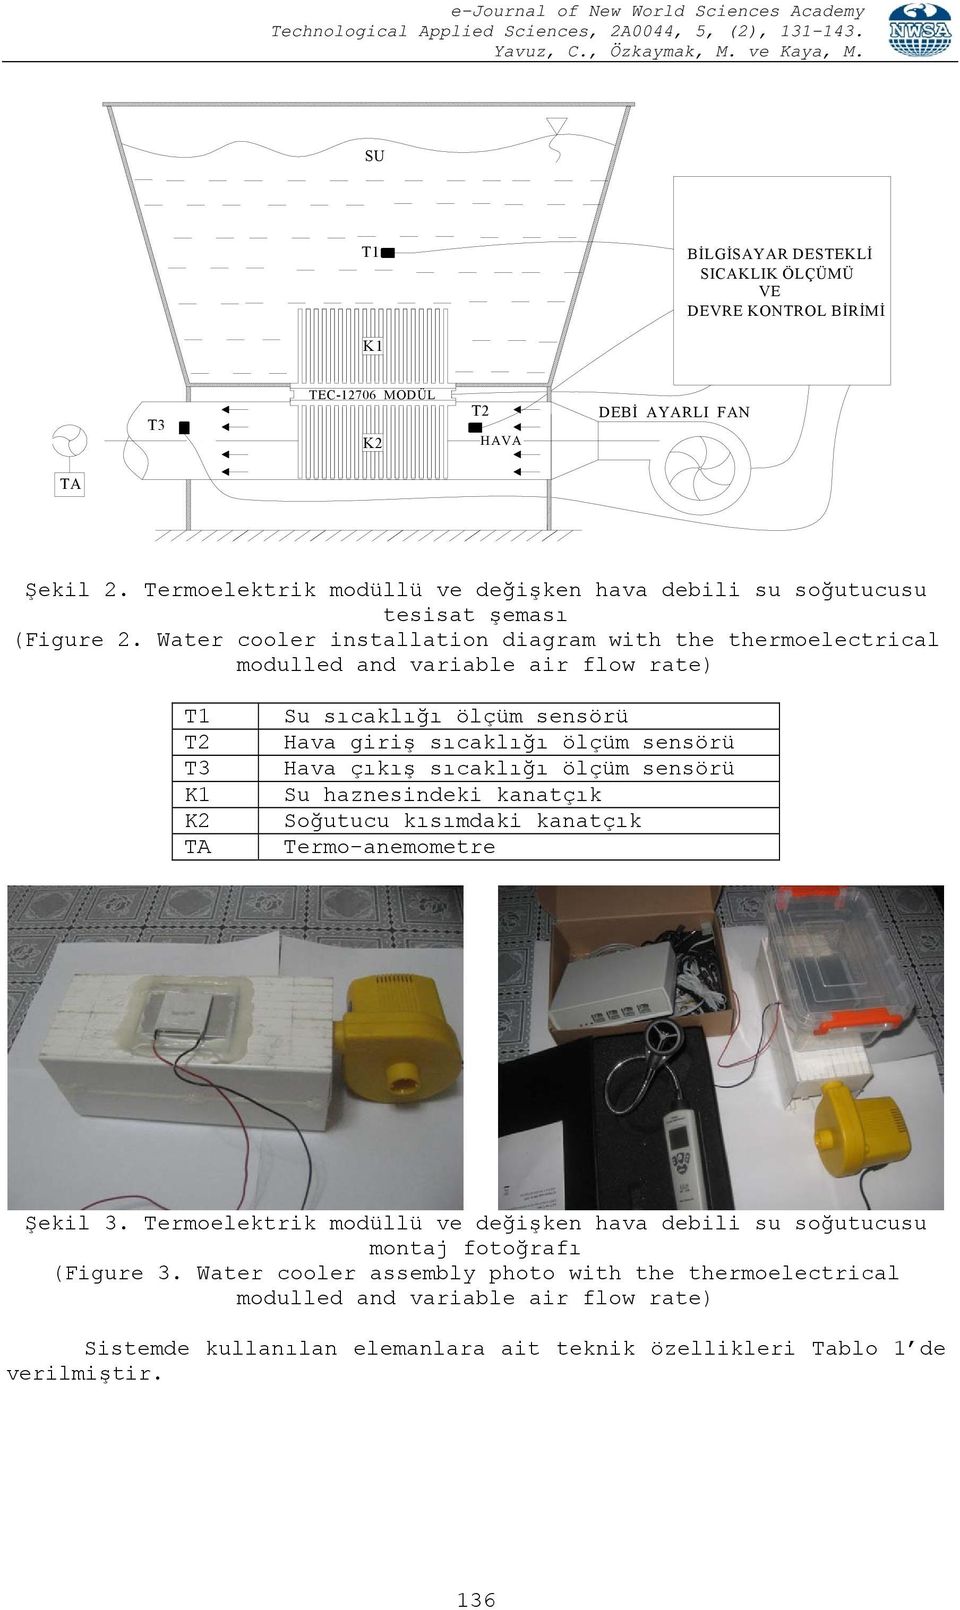 Water cooler installation diagram with the thermoelectrical modulled and variable air flow rate) T1 T2 T3 K1 K2 TA Su sıcaklığı ölçüm sensörü Hava giriş sıcaklığı ölçüm sensörü Hava çıkış